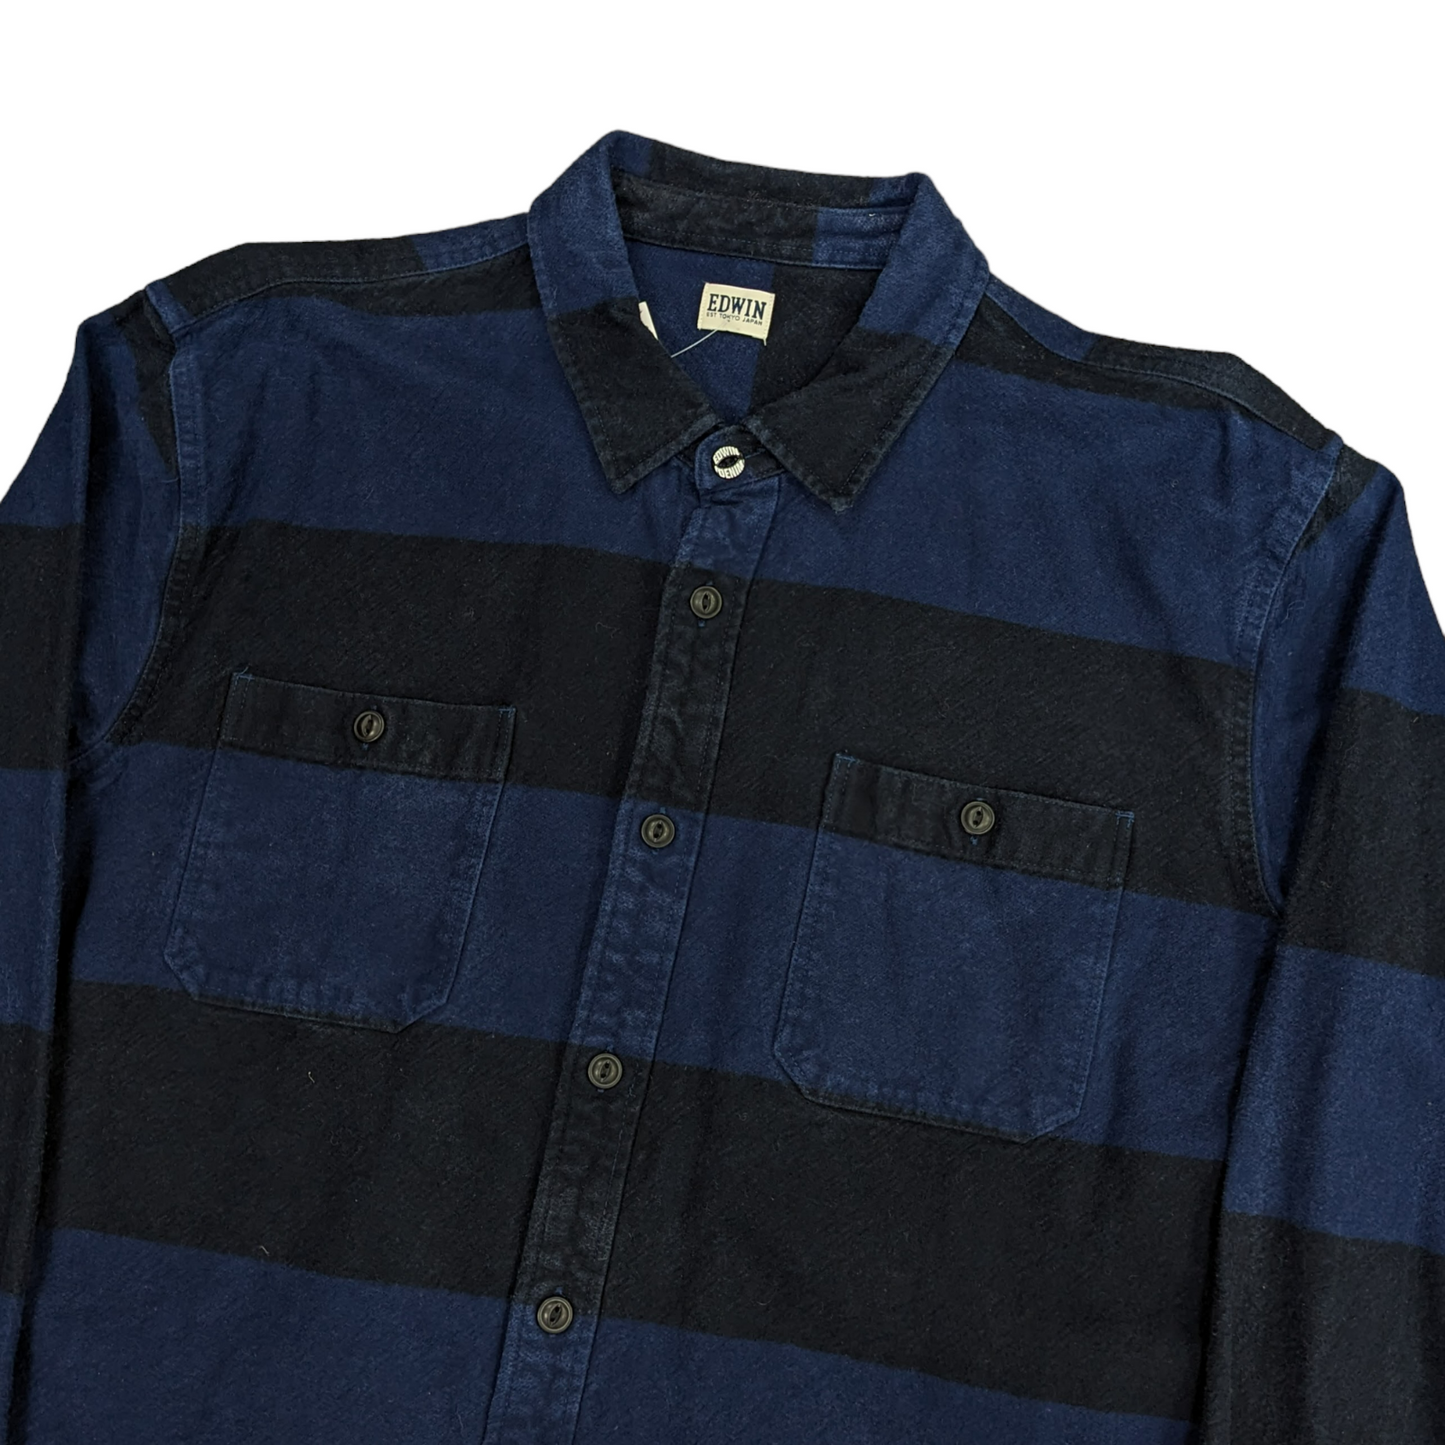 Edwin Striped Flannel Labour Shirt Size XL